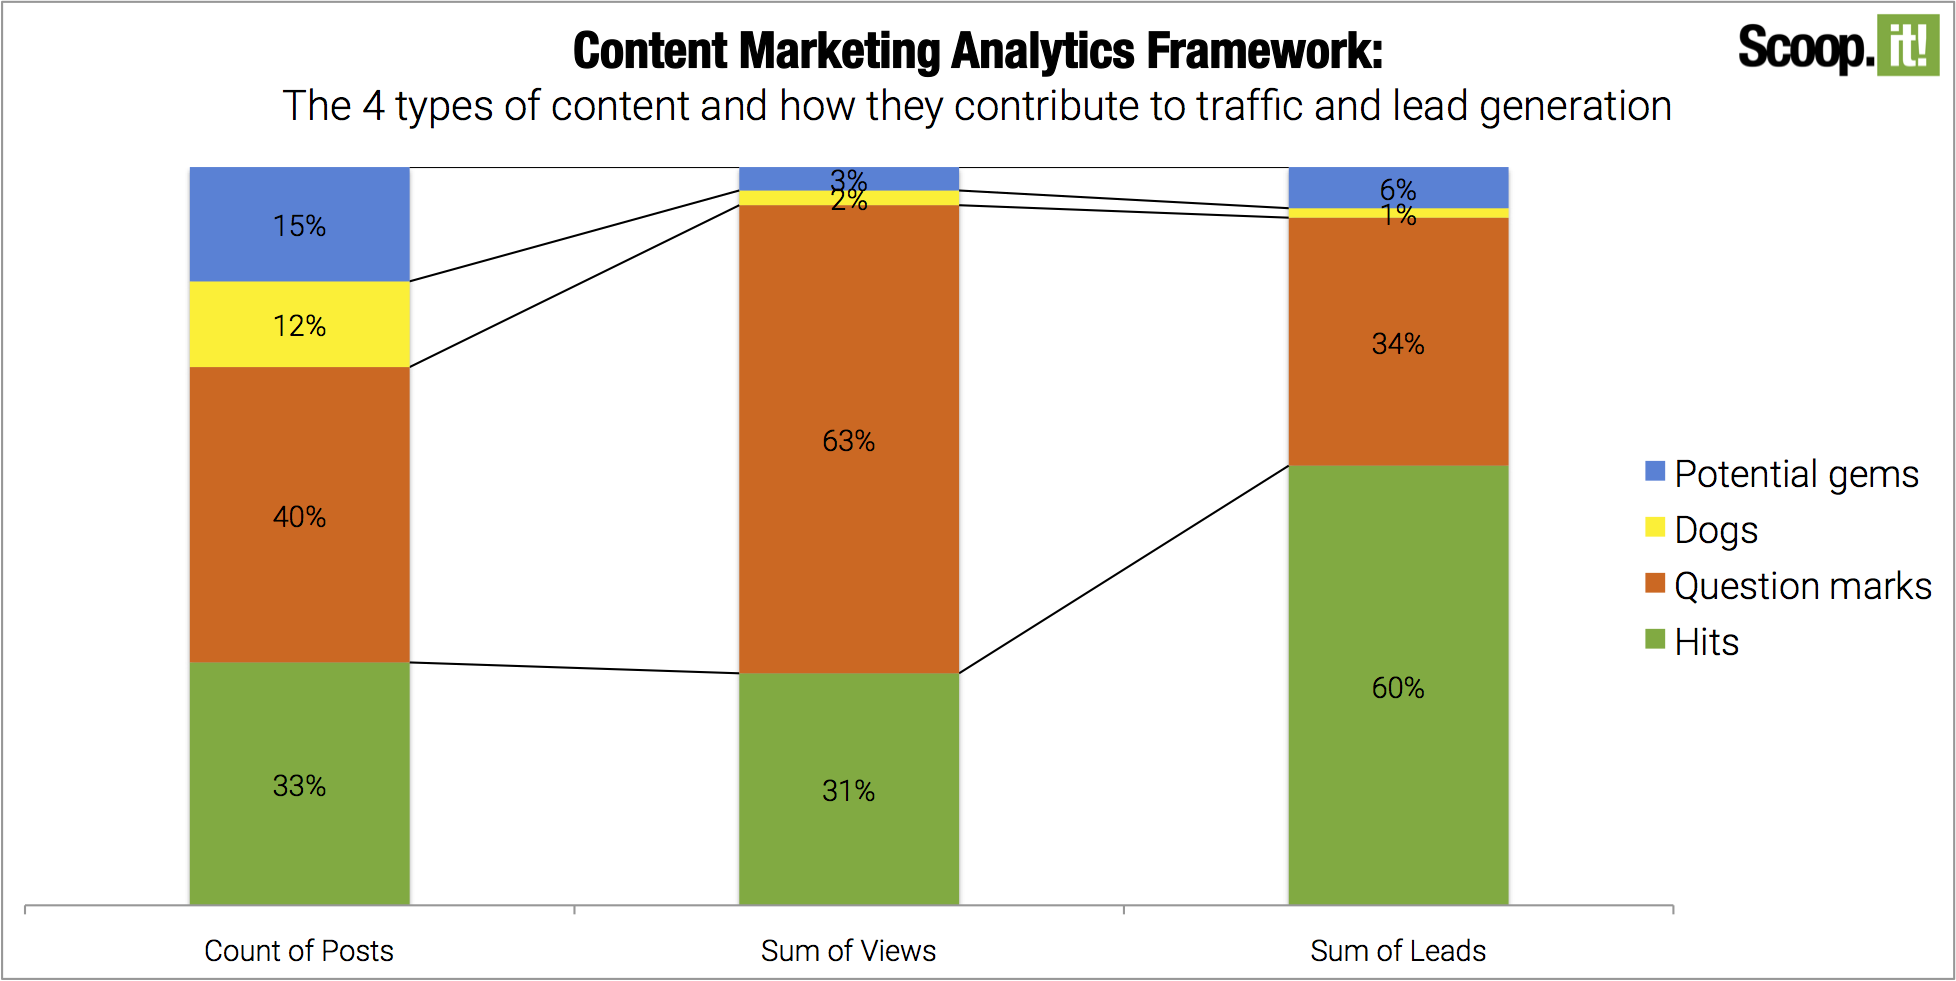 Content Marketing Analytics Framework for ROI